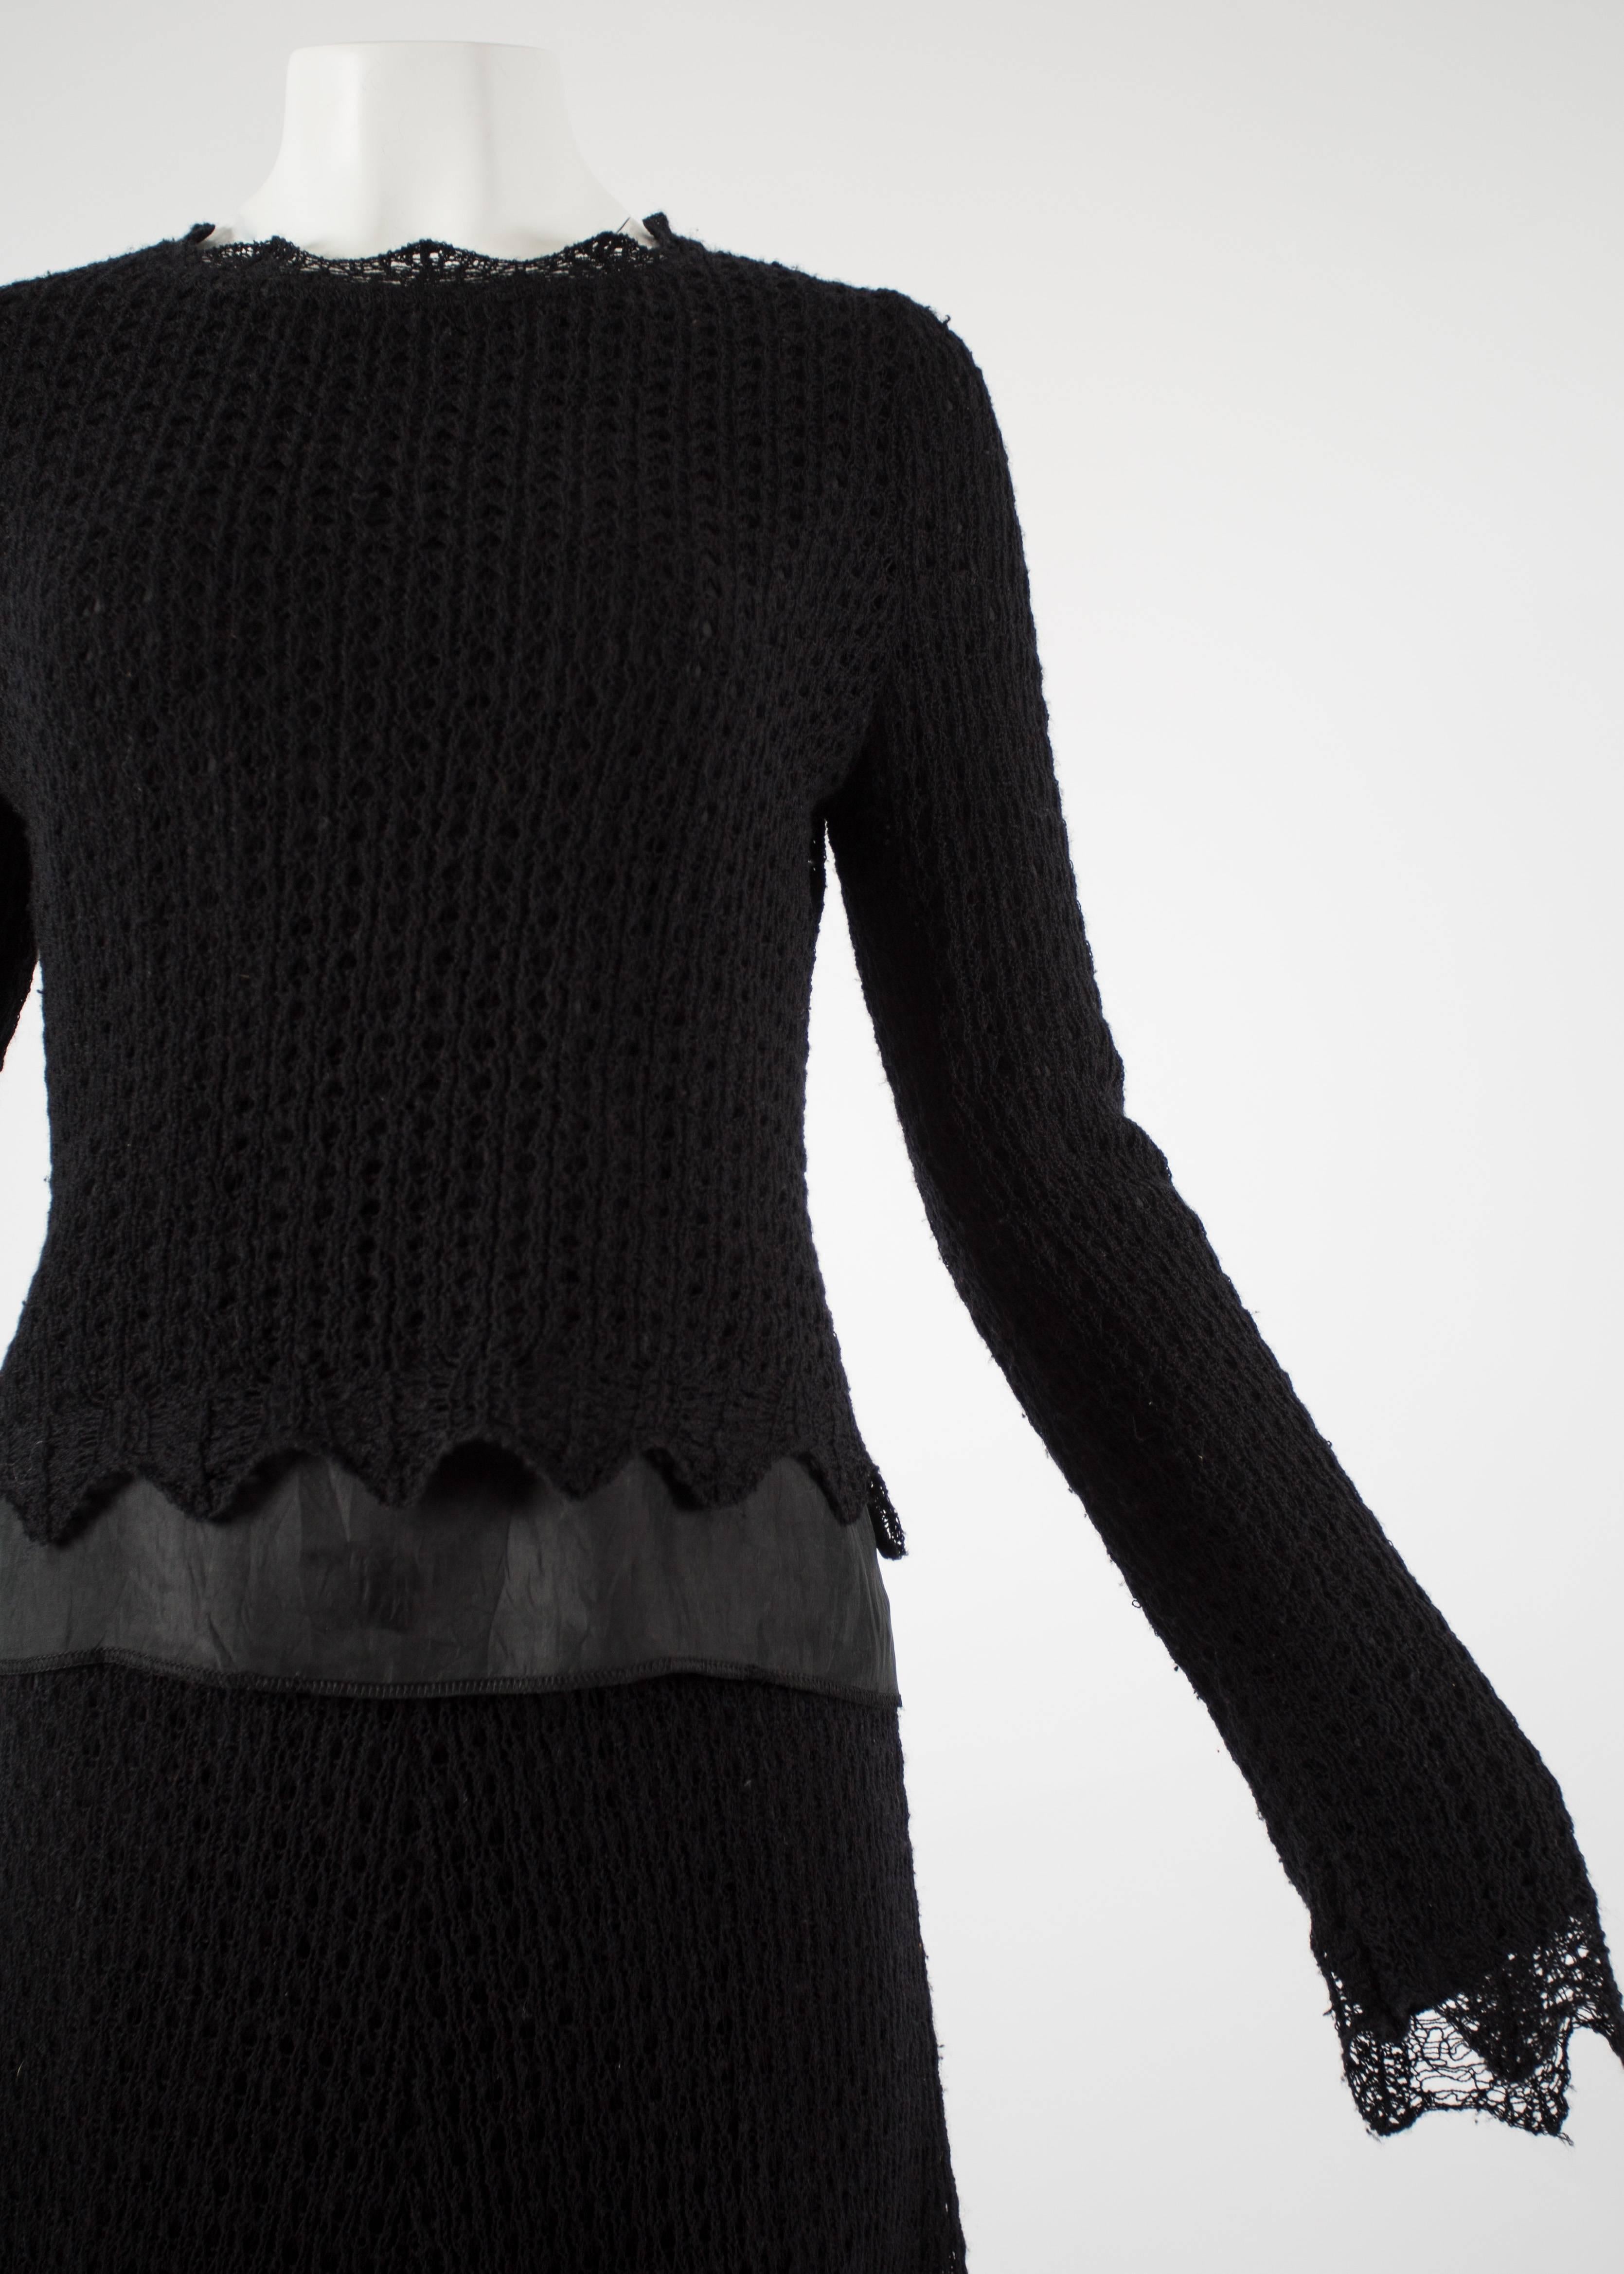 Black Maison Martin Margiela early 1990s black crochet wool and satin skirt suit